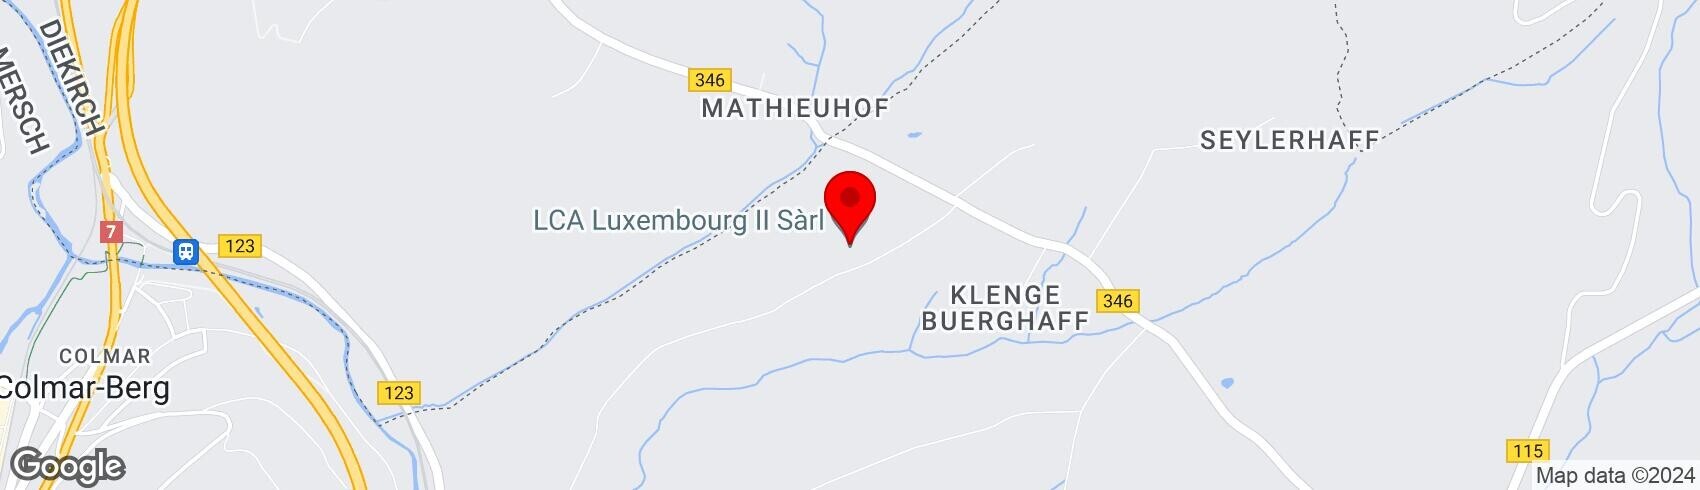 Location on Google Map (new window)